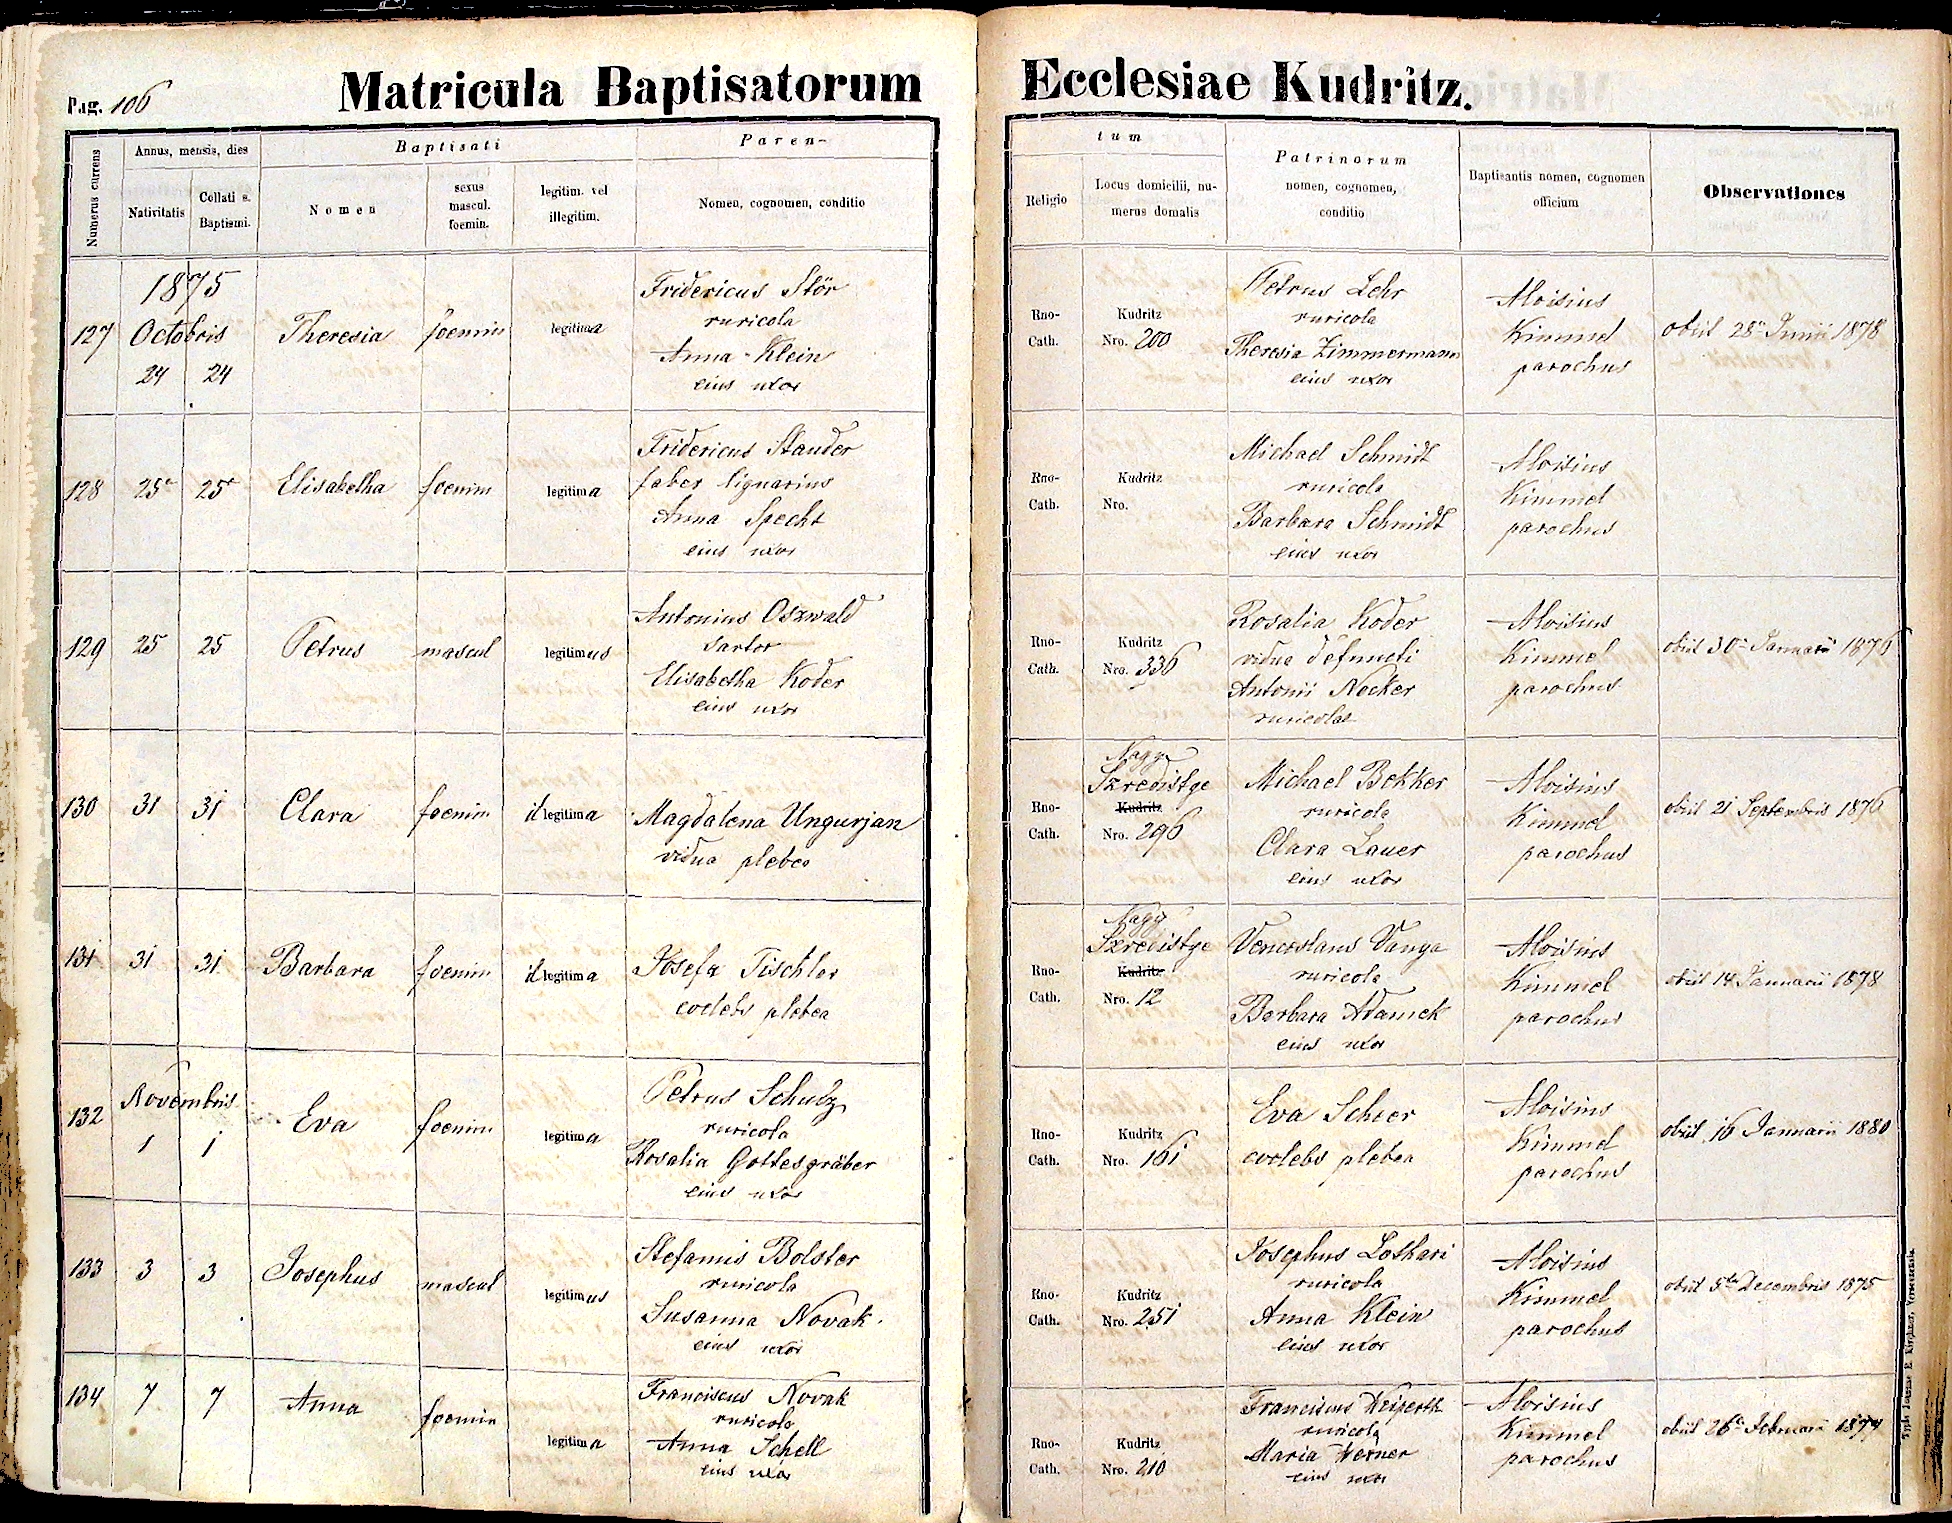 images/church_records/BIRTHS/1884-1899B/1890/106